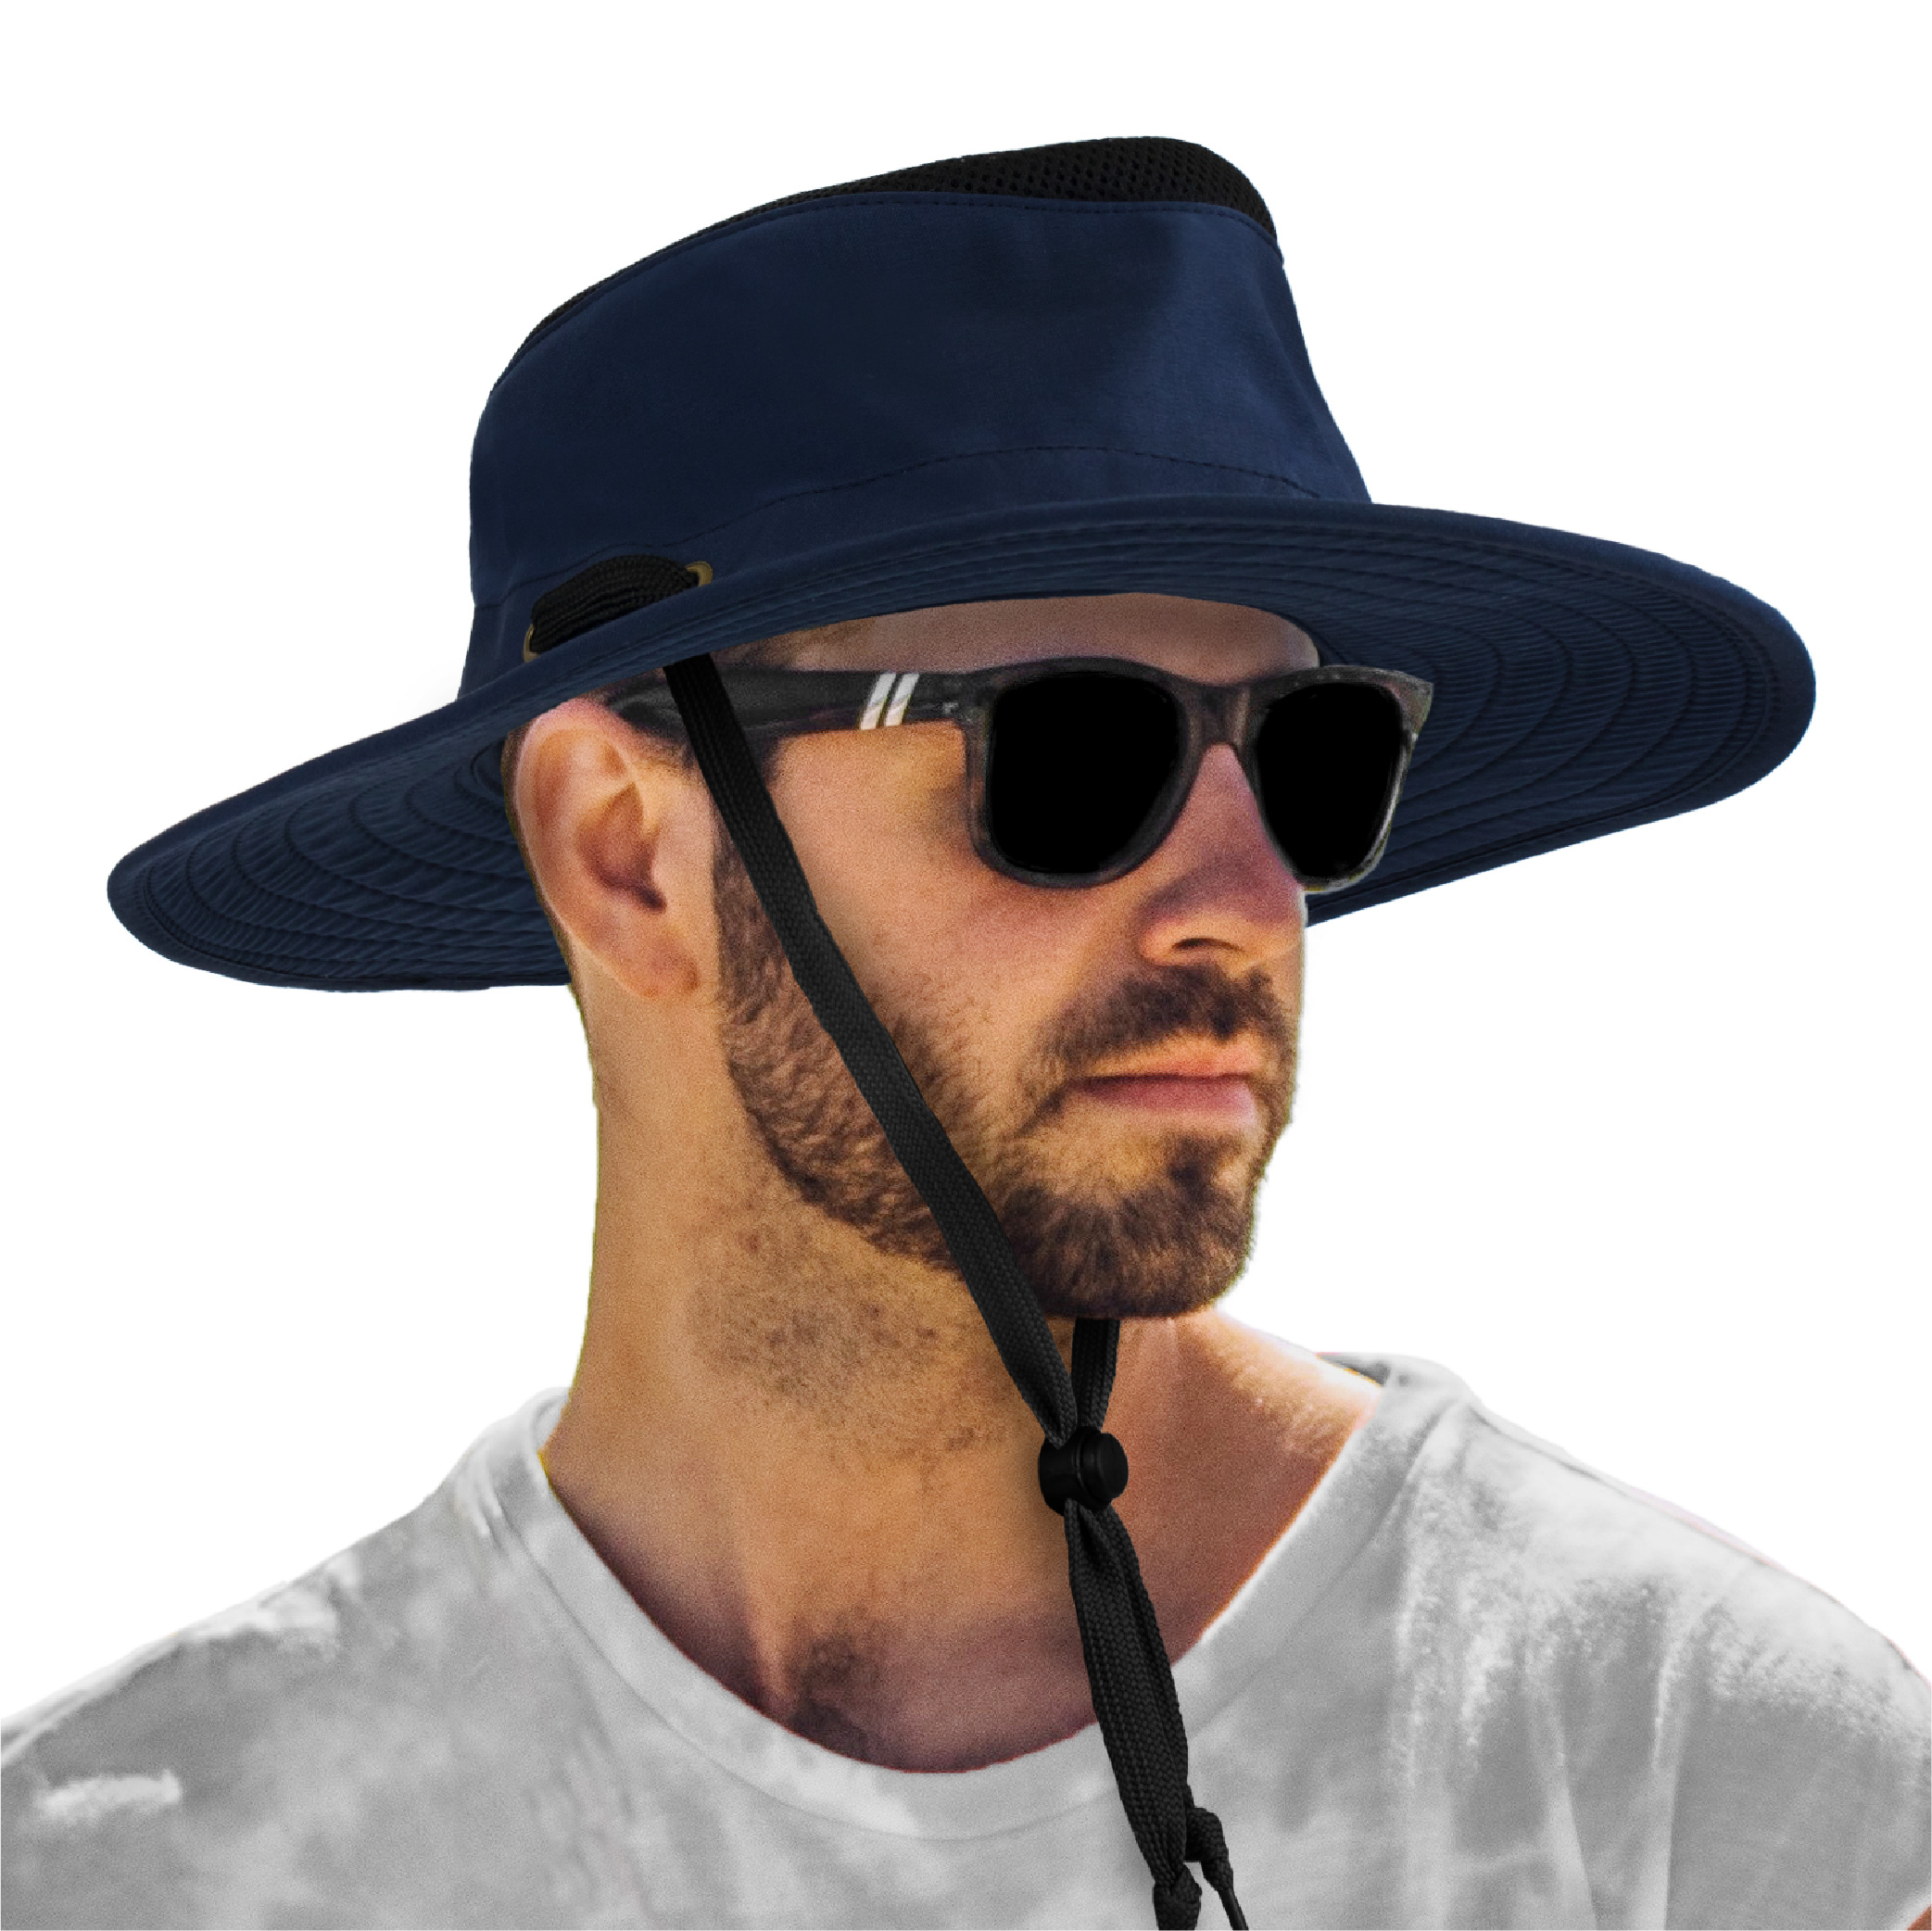 SUN CUBE Sun Hat For Men Wide Brim, Women Safari Hat, Hiking Bucket Hat UV Sun Protection, Boonie Hat Outdoor | Fishing Hat Summer For Sun Beach Camping UPF 50+, Navy Blue - image 1 of 8